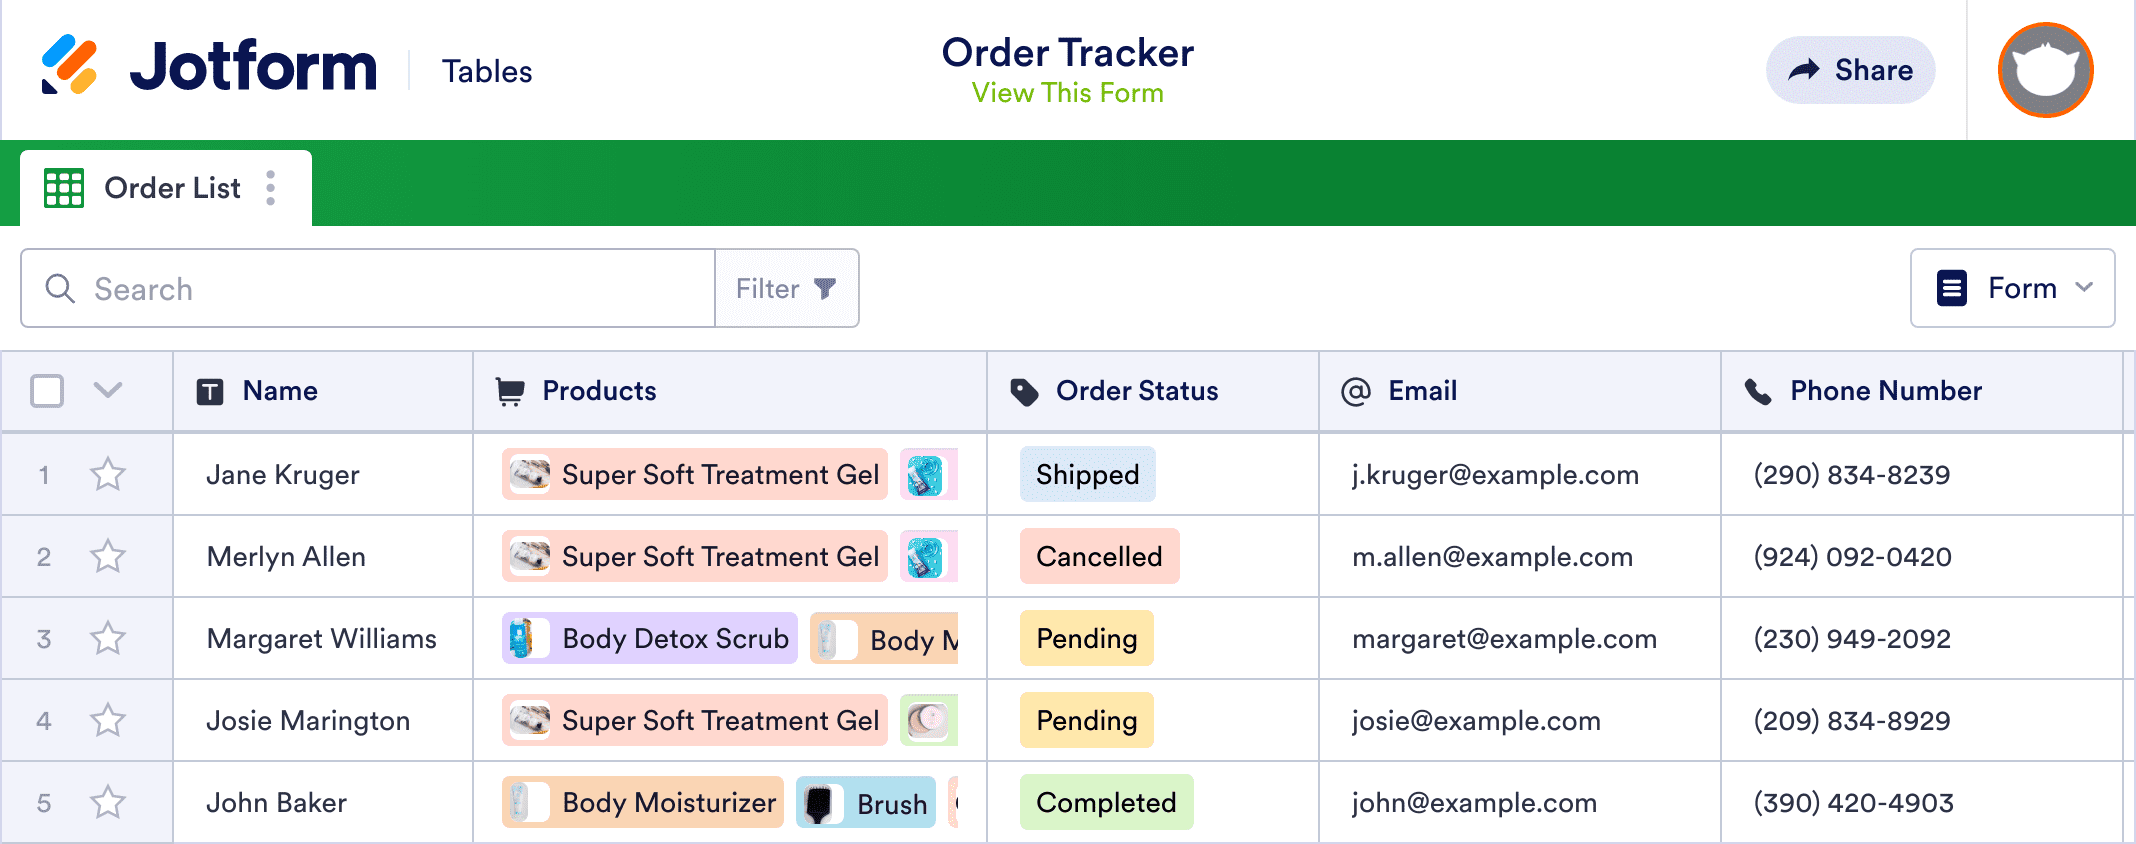 Order Tracker Template Jotform Tables